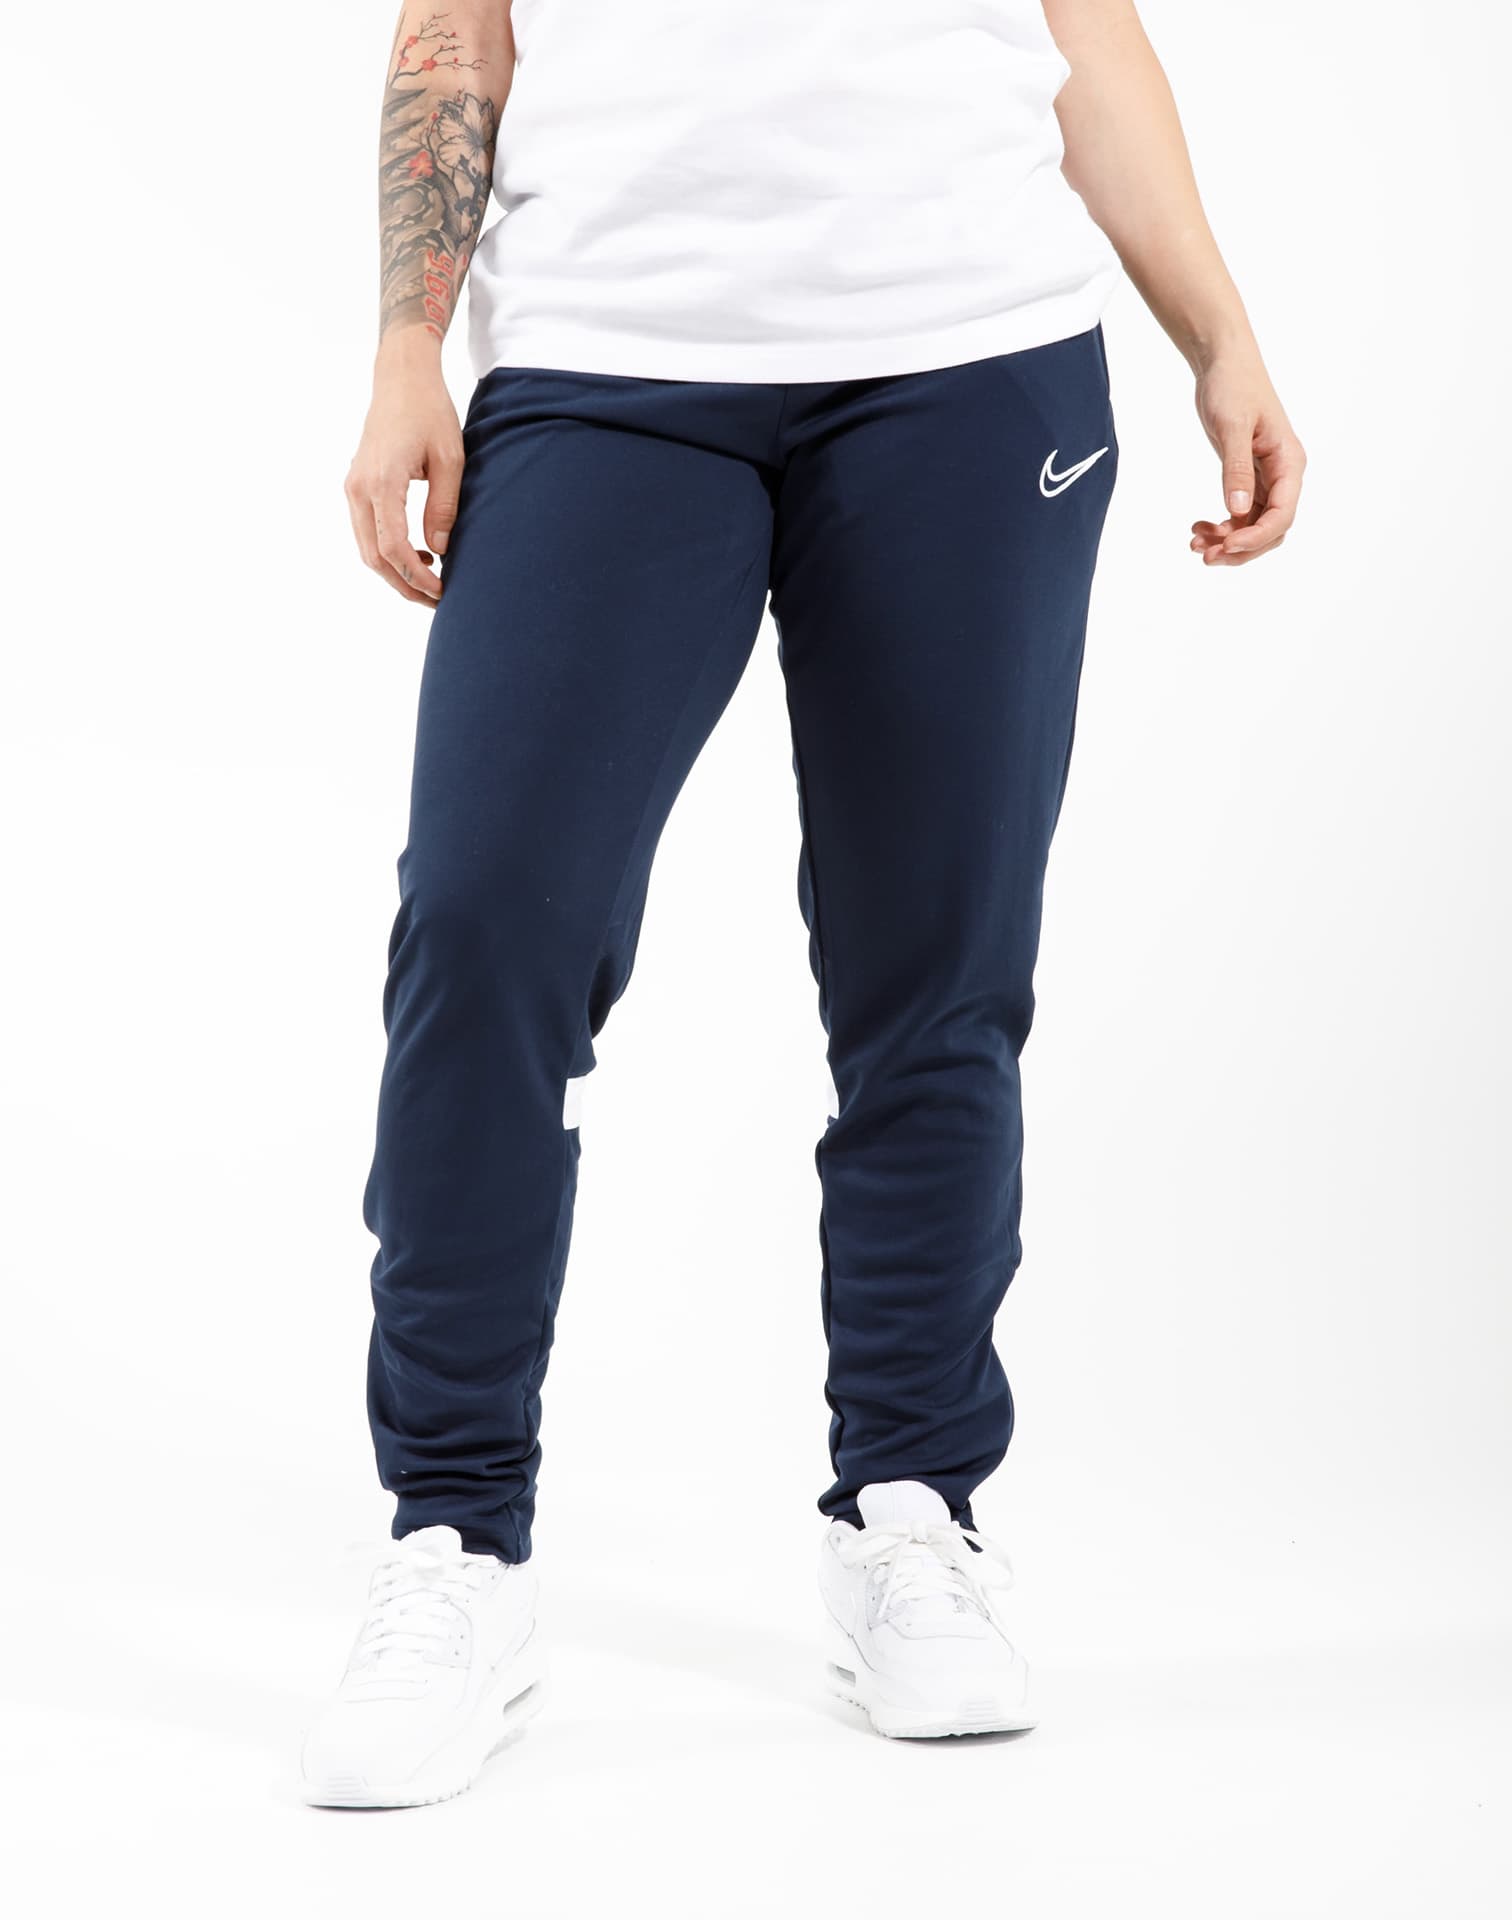 Nike | Strike Men's Nike Dri-FIT Soccer Pants | Navy/White |  SportsDirect.com